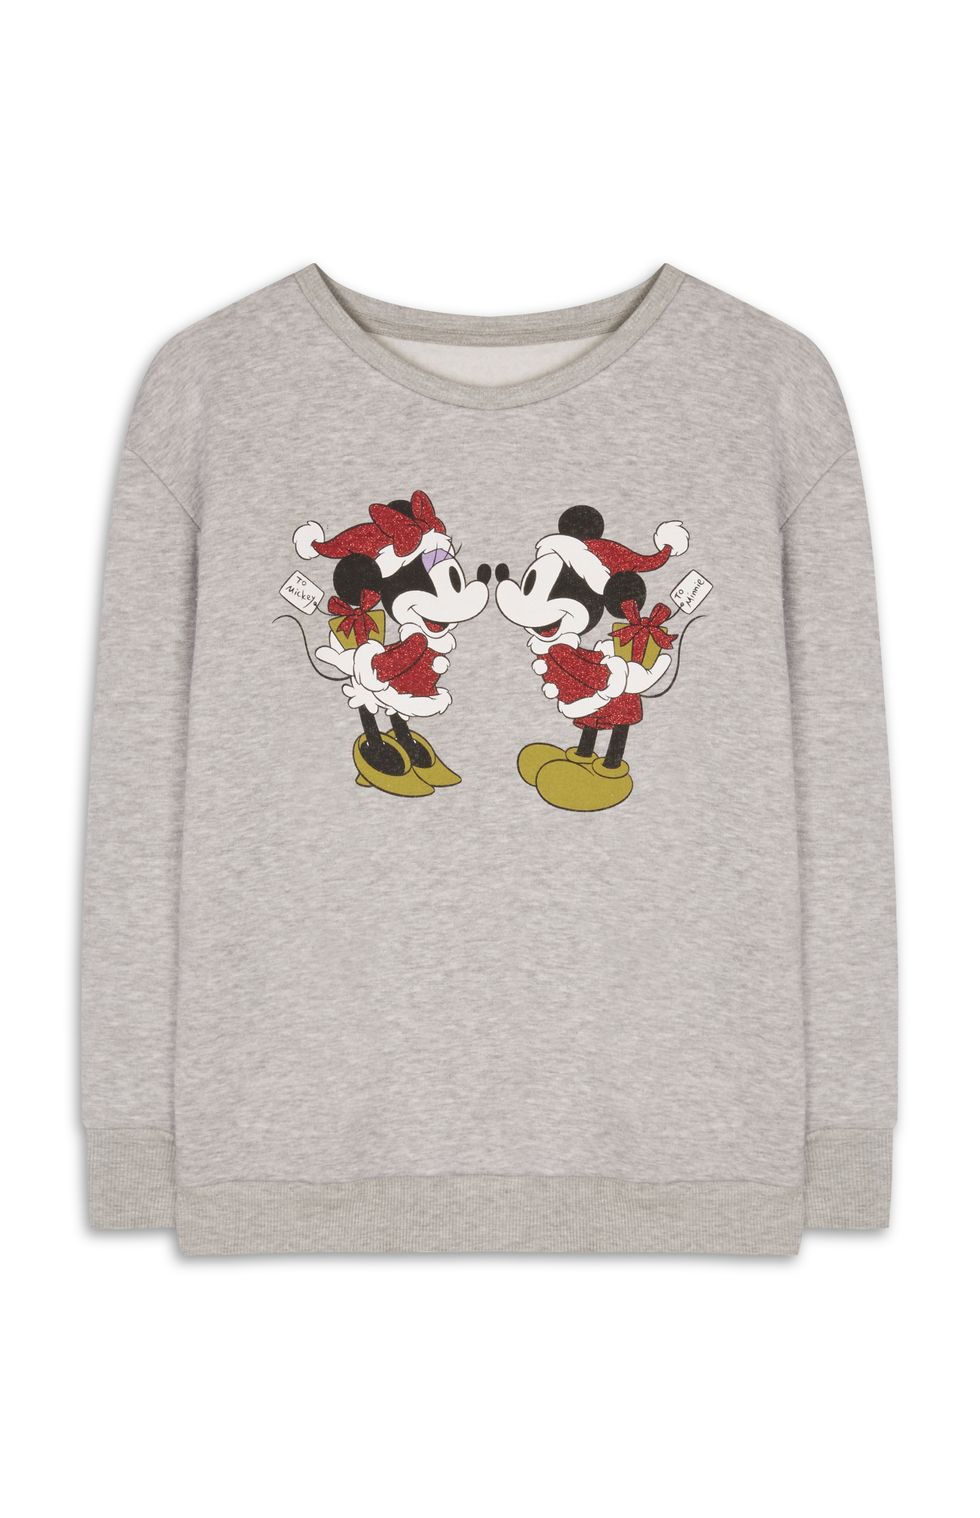 Primark Disney Christmas jumper